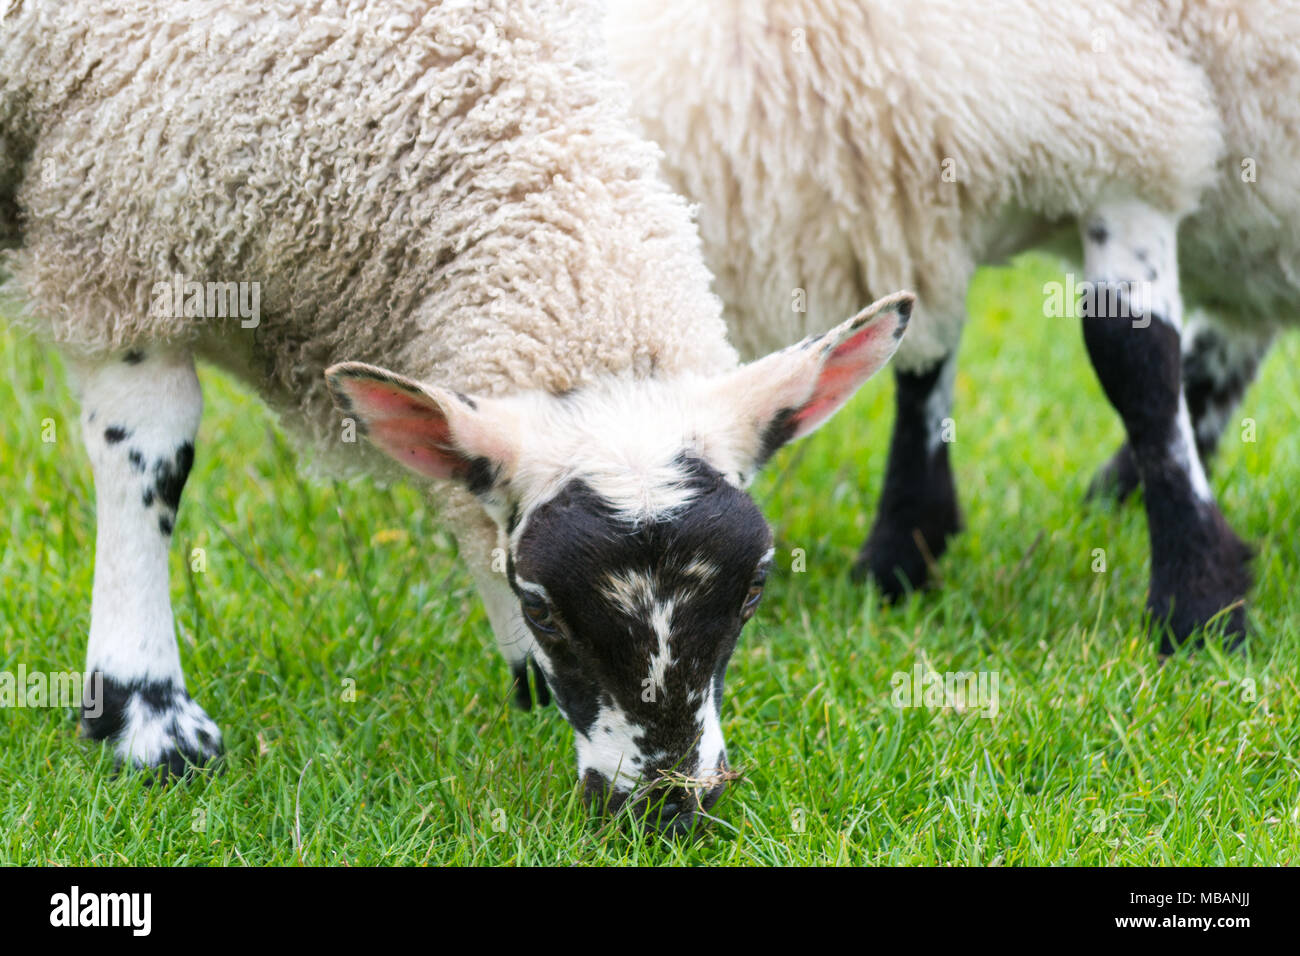 Fleece laden sheep grazing on lush green grass on UK farmland. Stock Photo